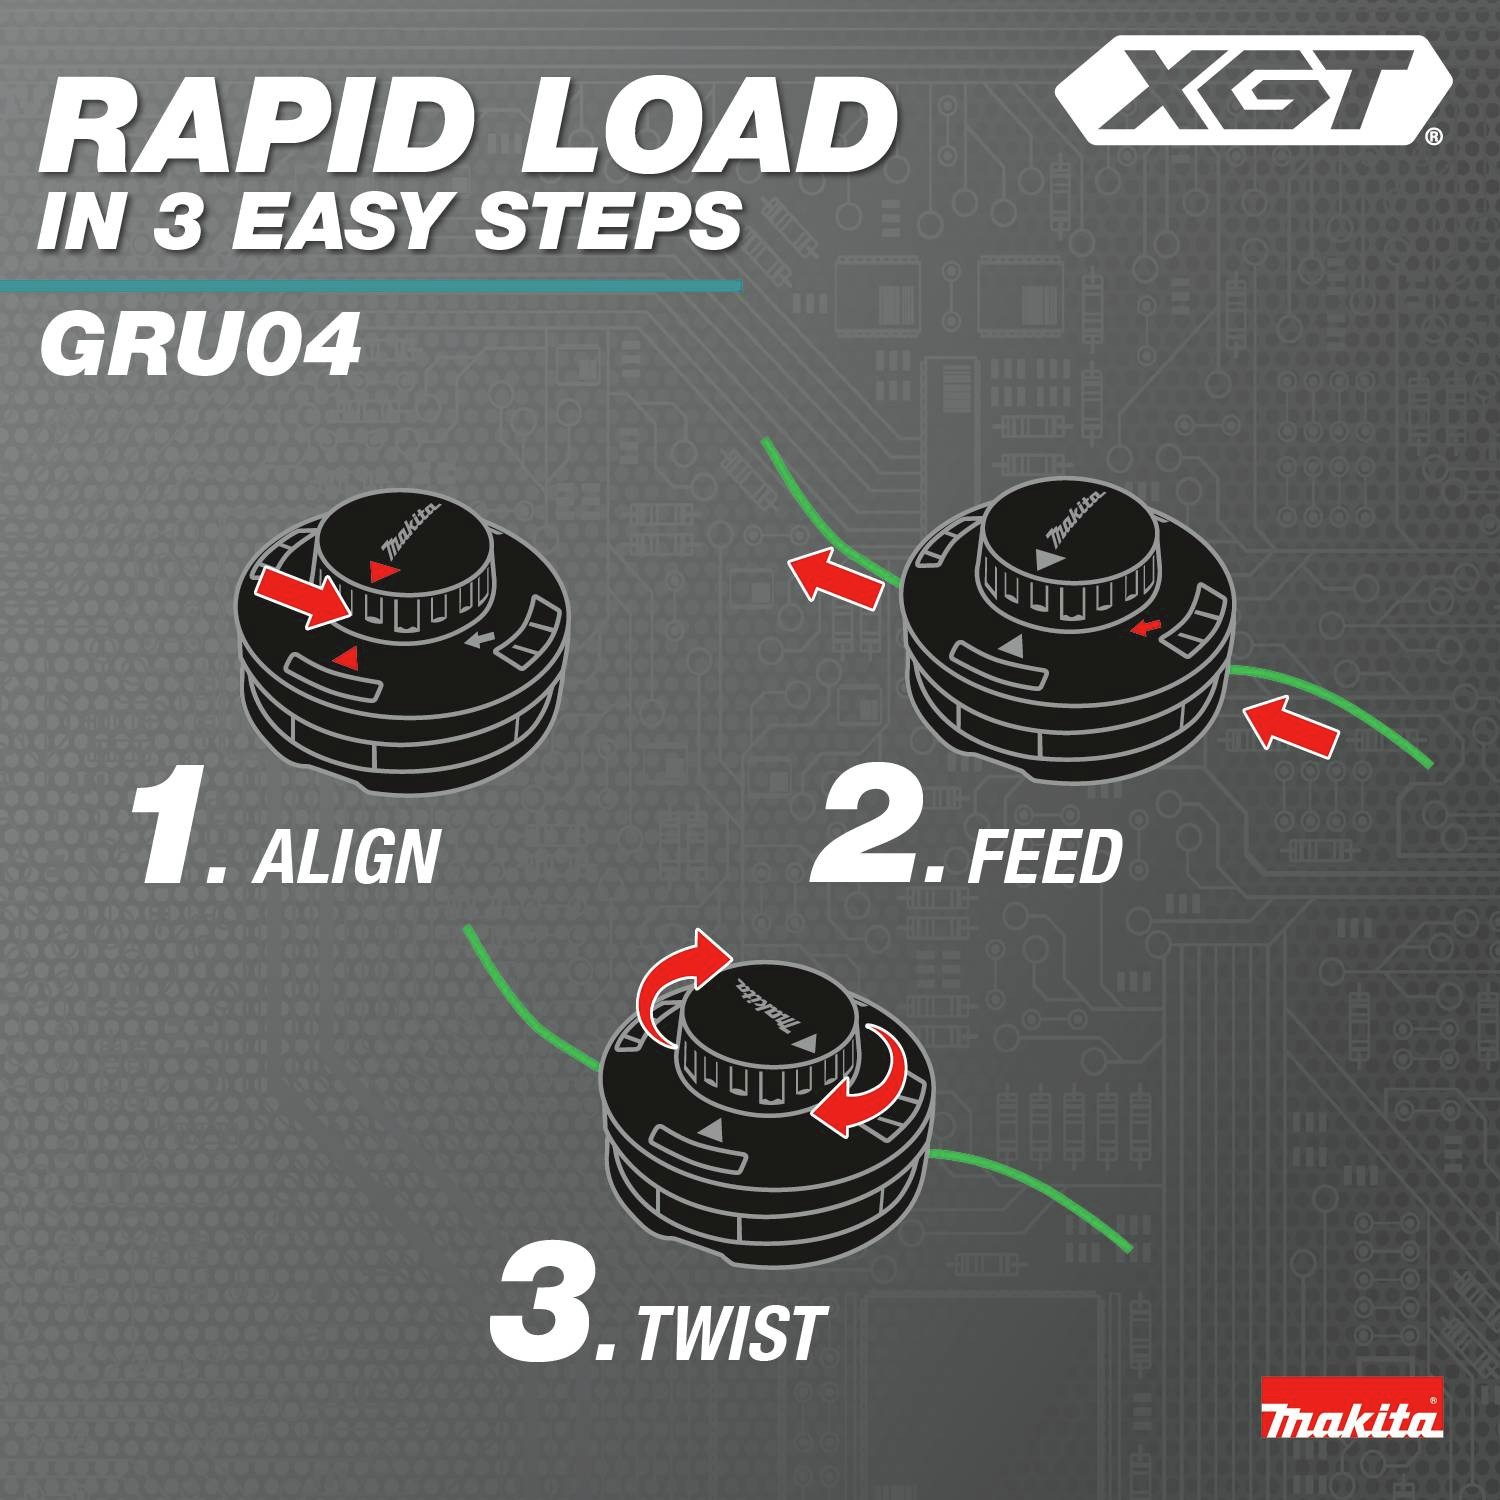 Rapid Load in 3 Easy Steps: Align, Feed, Twist